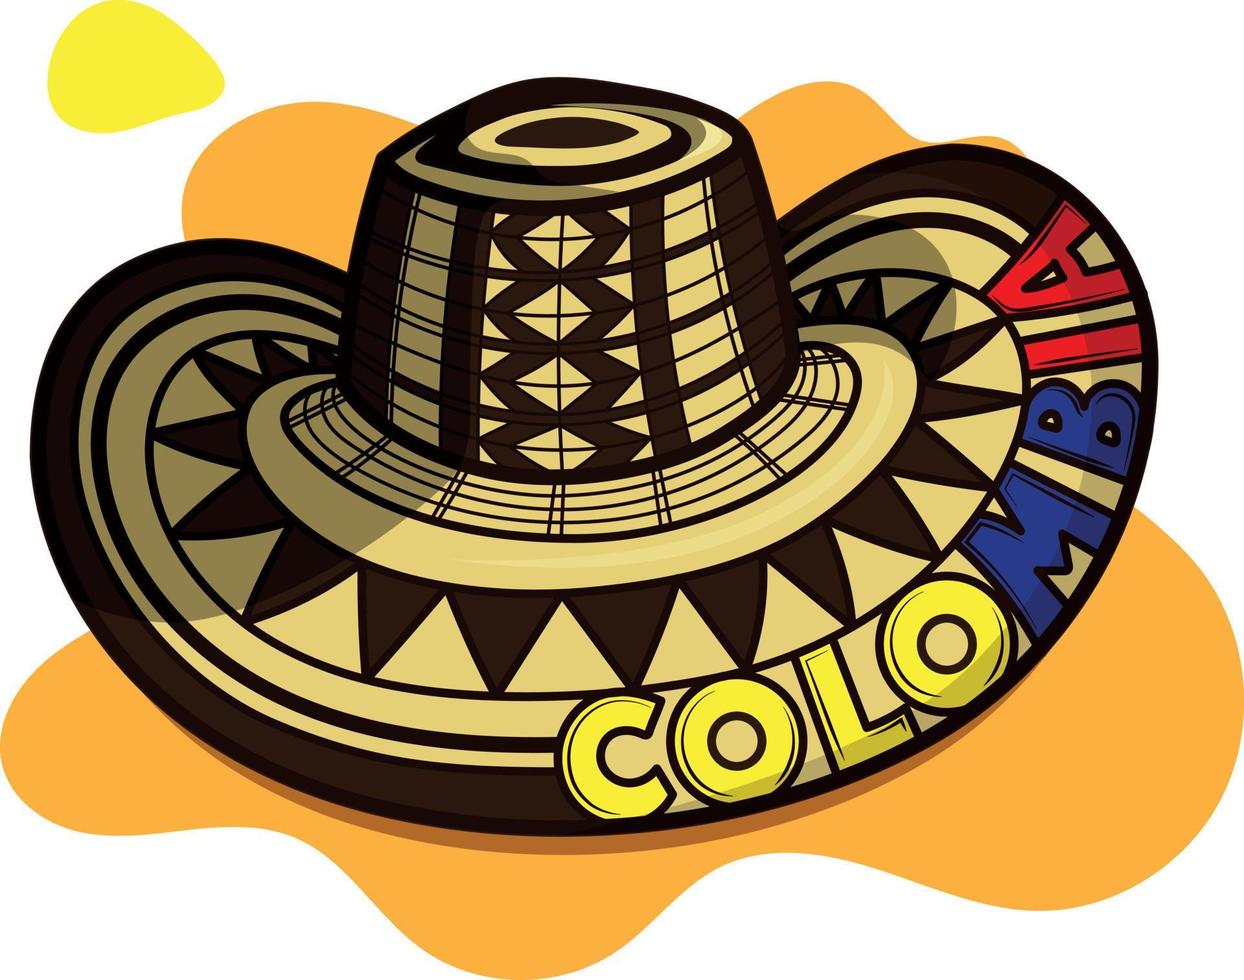 sombrero vueltiao Colômbia vetor